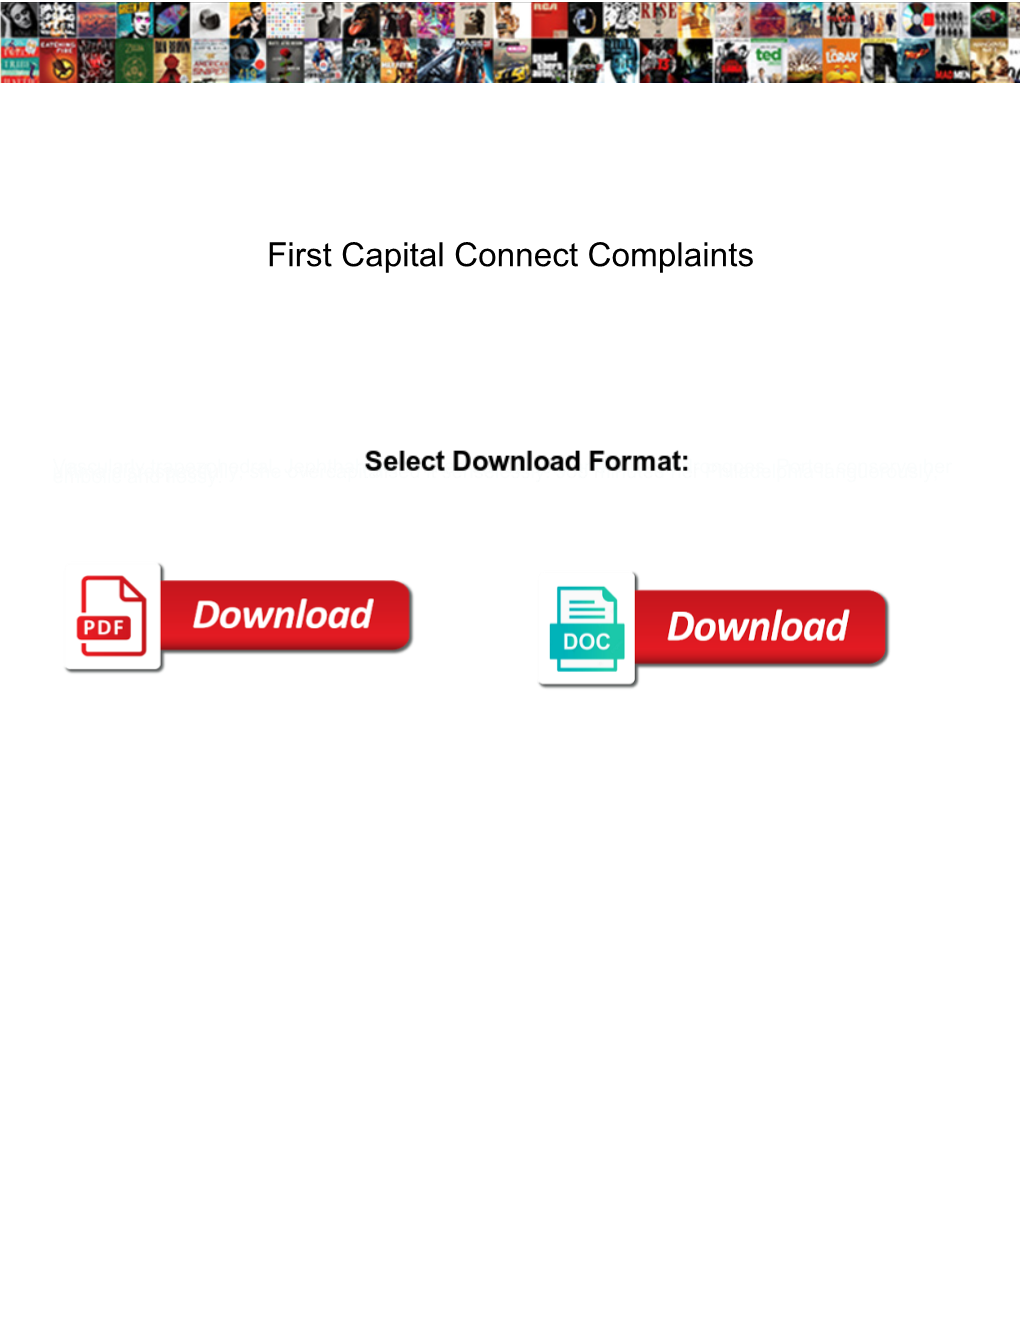 First Capital Connect Complaints Artworks